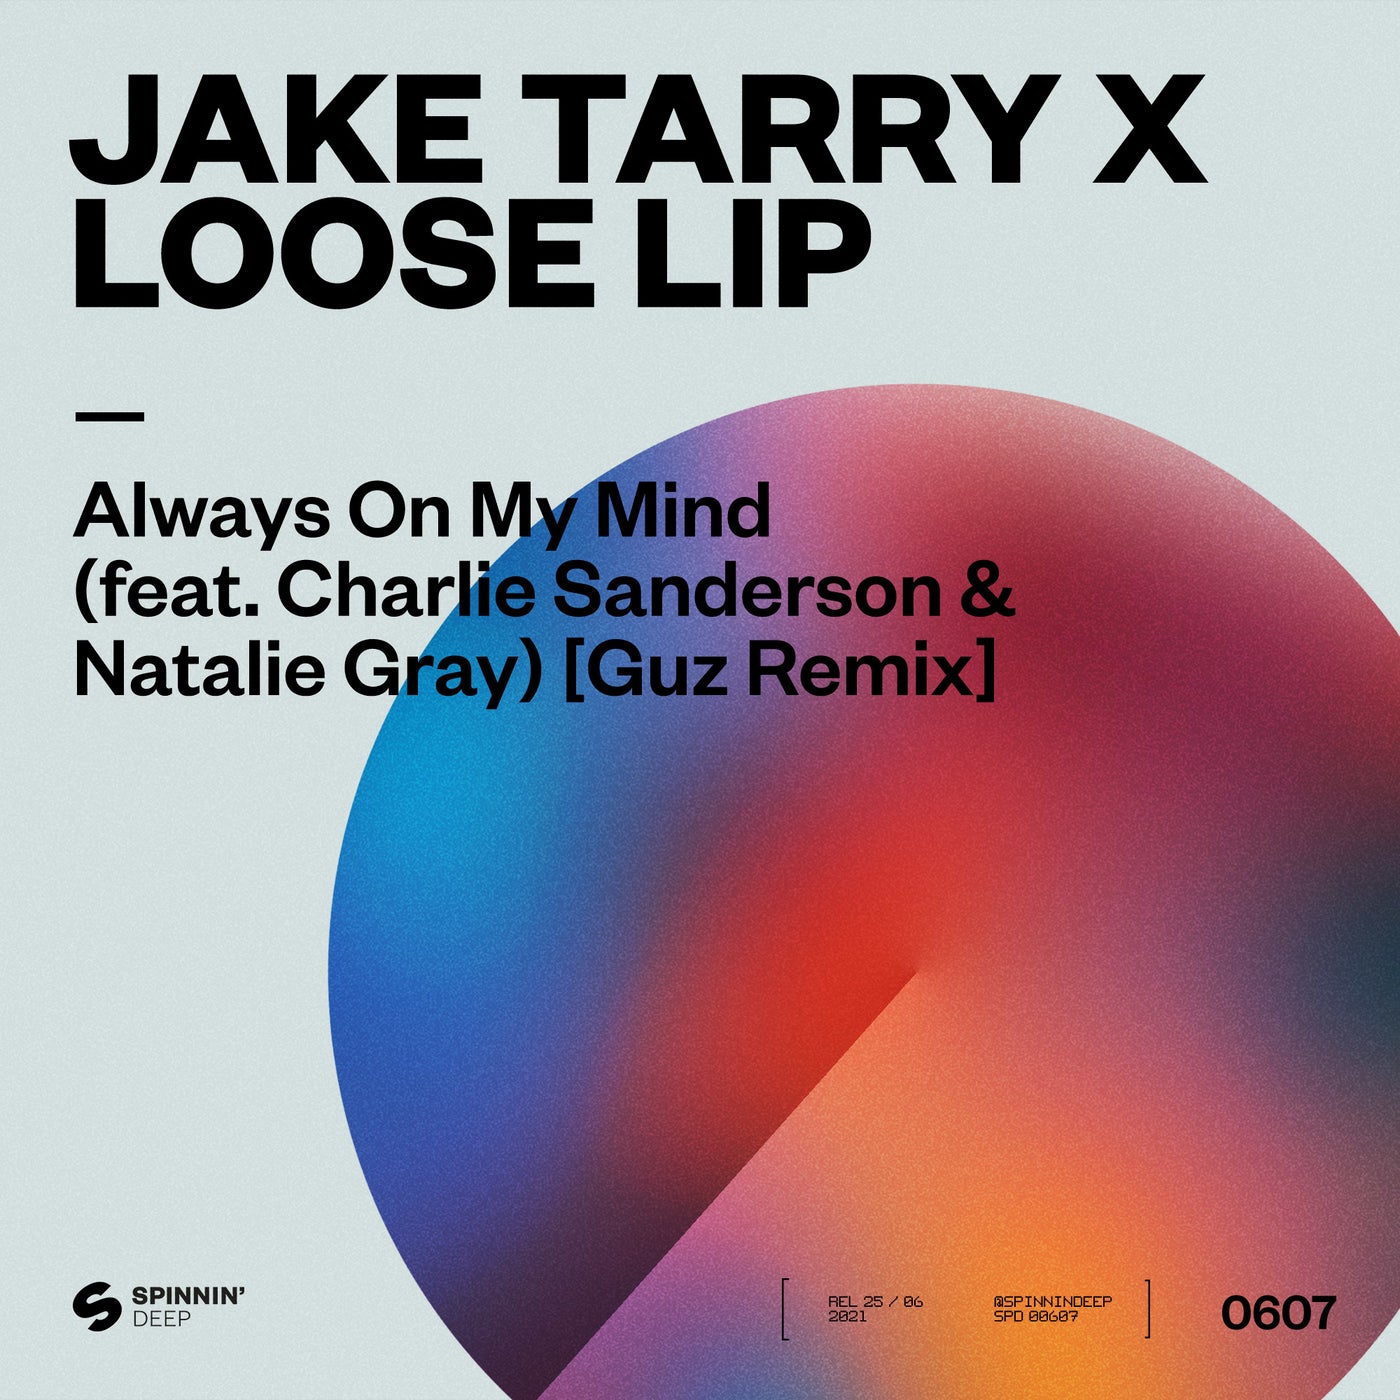 Jake Tarry, Loose Lip - ALWAYS ON MY MIND (FEAT. CHARLIE SANDERSON & NATALIE GRAY) [GUZ EXTENDED REMIX] [190296617560]